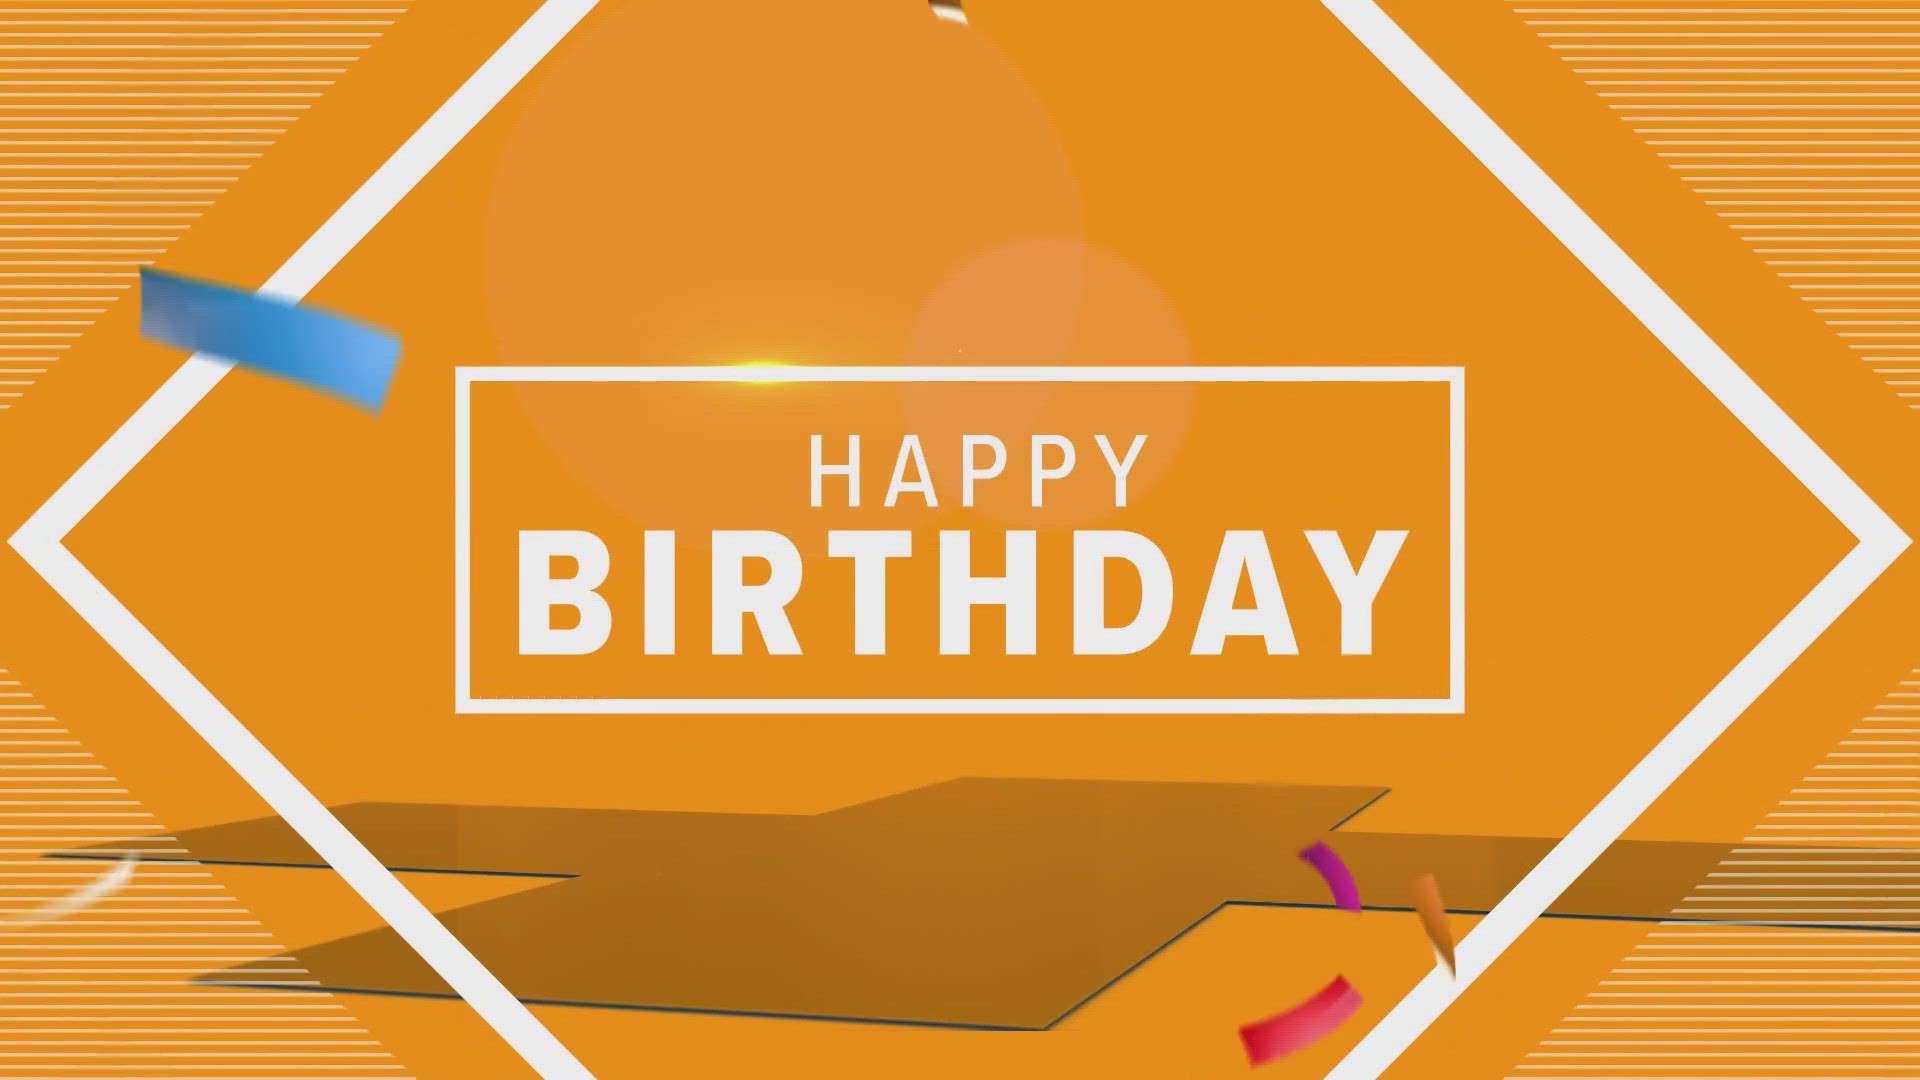 Texas Today is wishing everyone born on January 19, a very happy birthday!